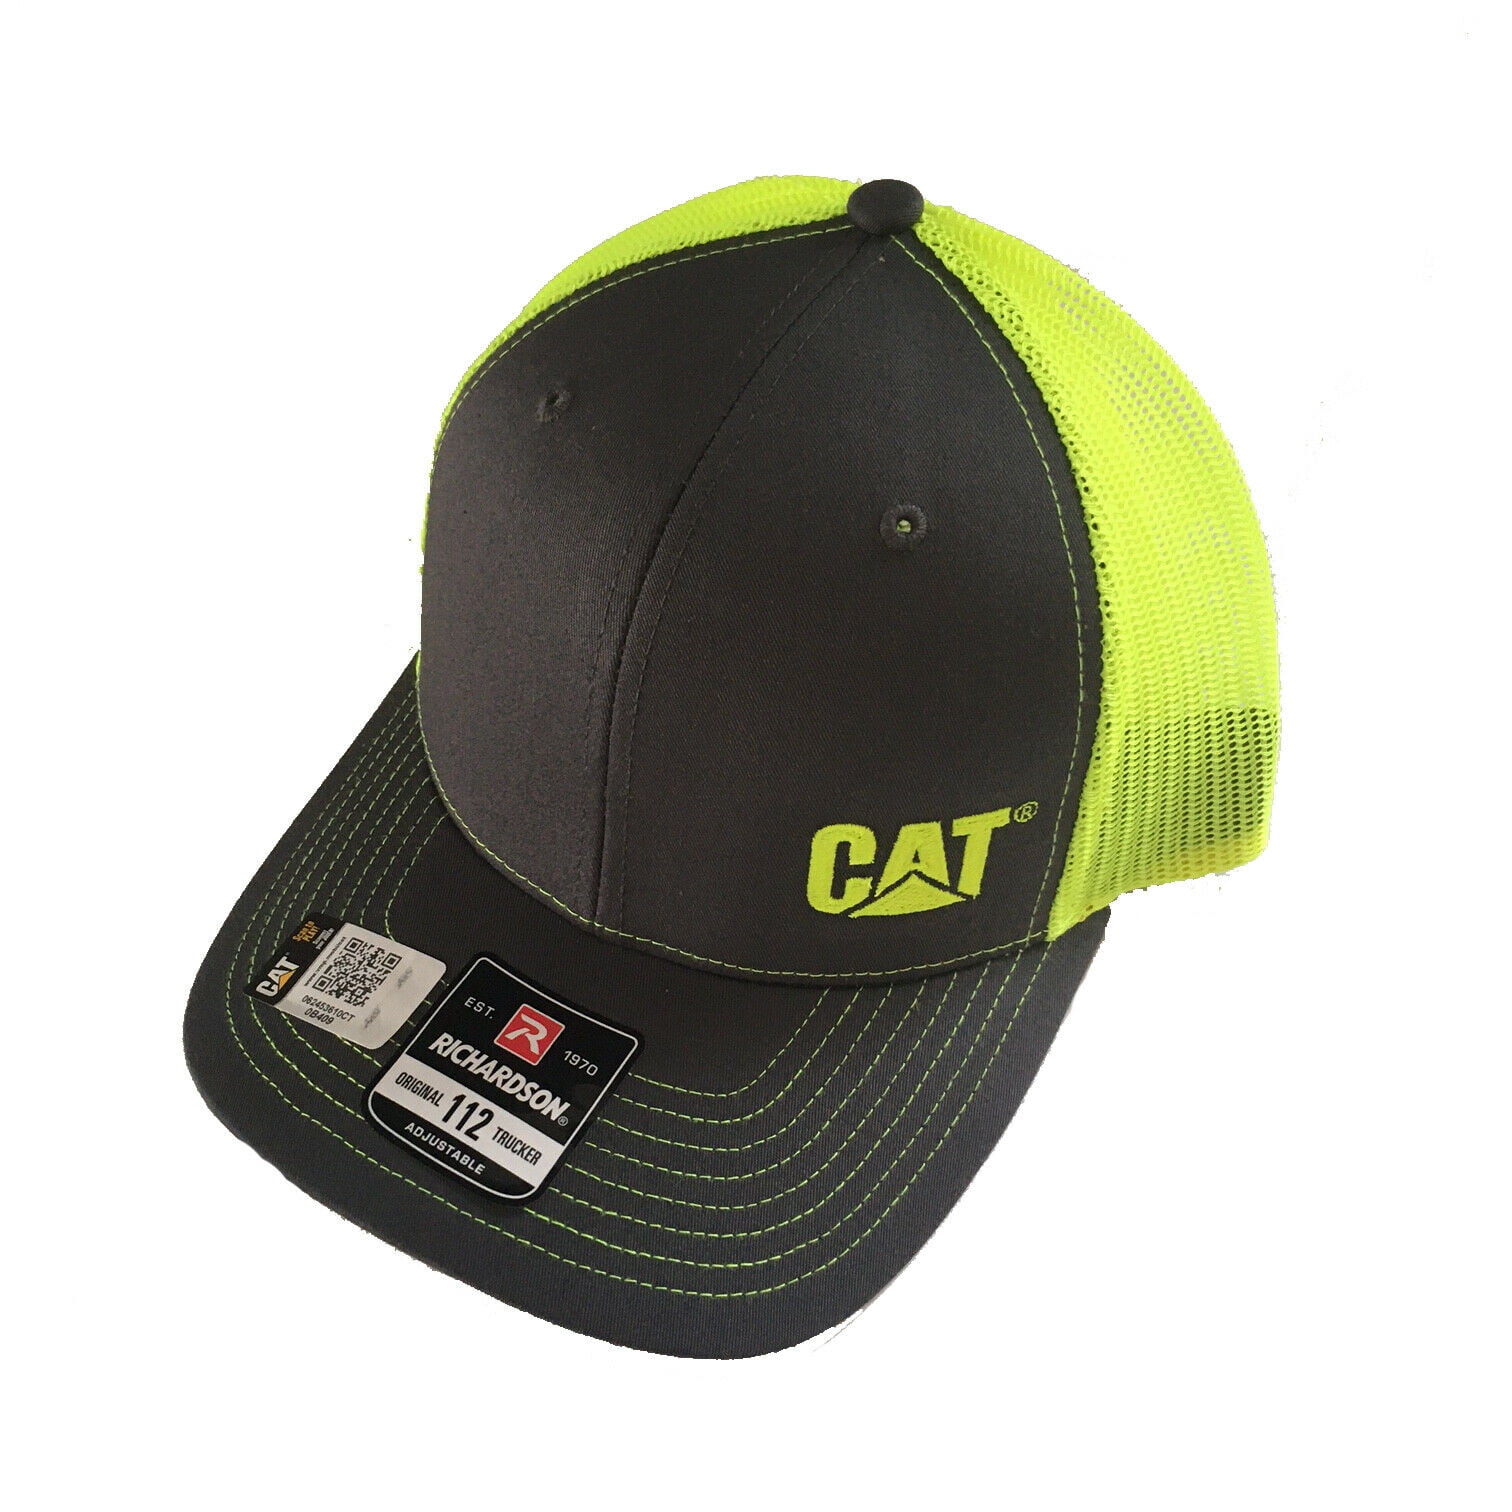 Caterpillar CAT Heavy Equipment Big Logo Black Mesh Cap/Hat 